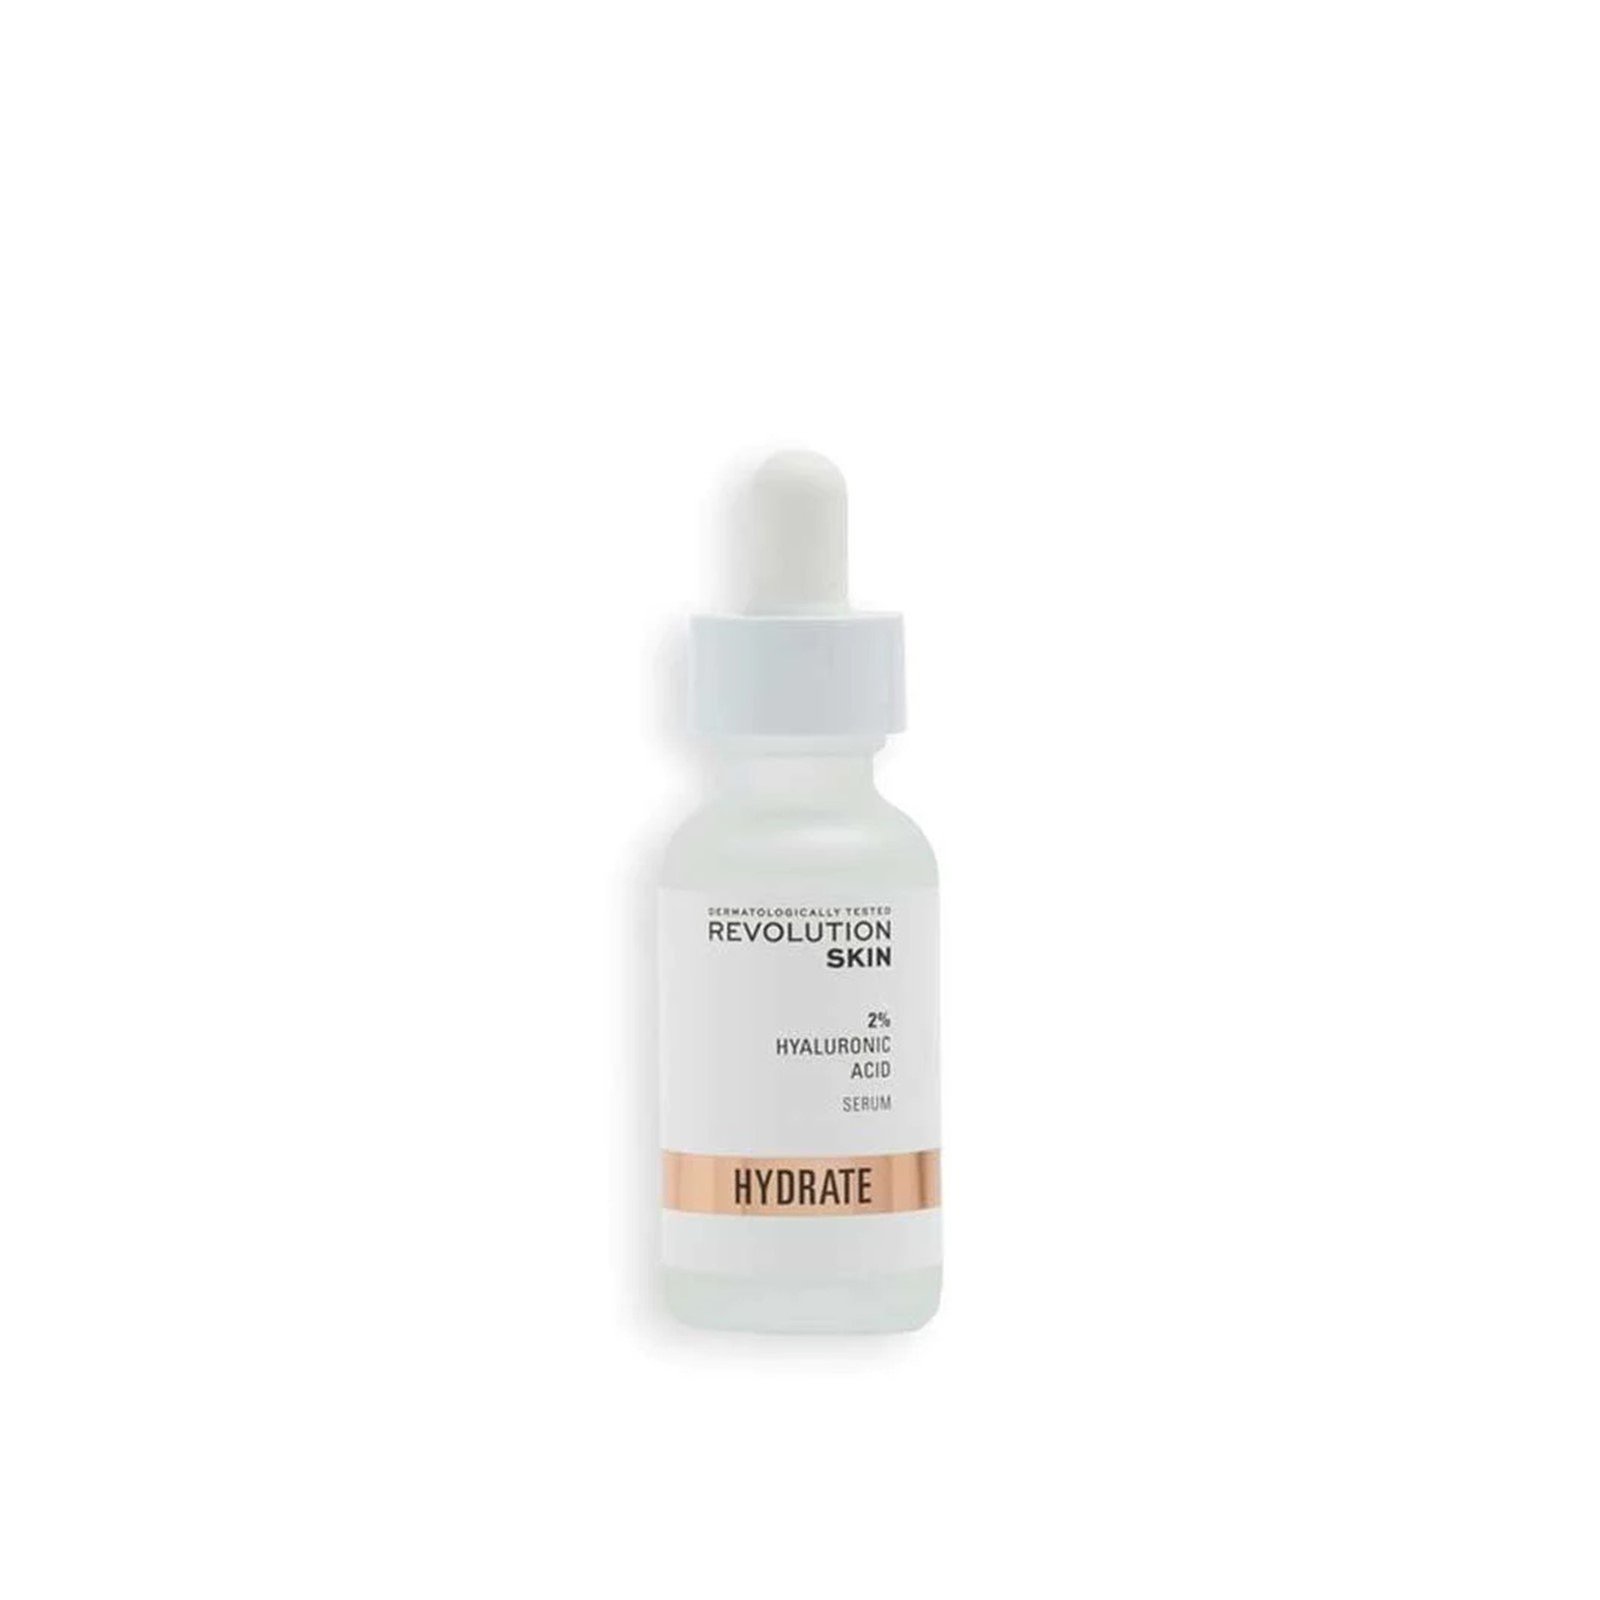 Revolution Skincare Hydrate 2% Hyaluronic Acid Serum 30ml (1.01 fl oz)